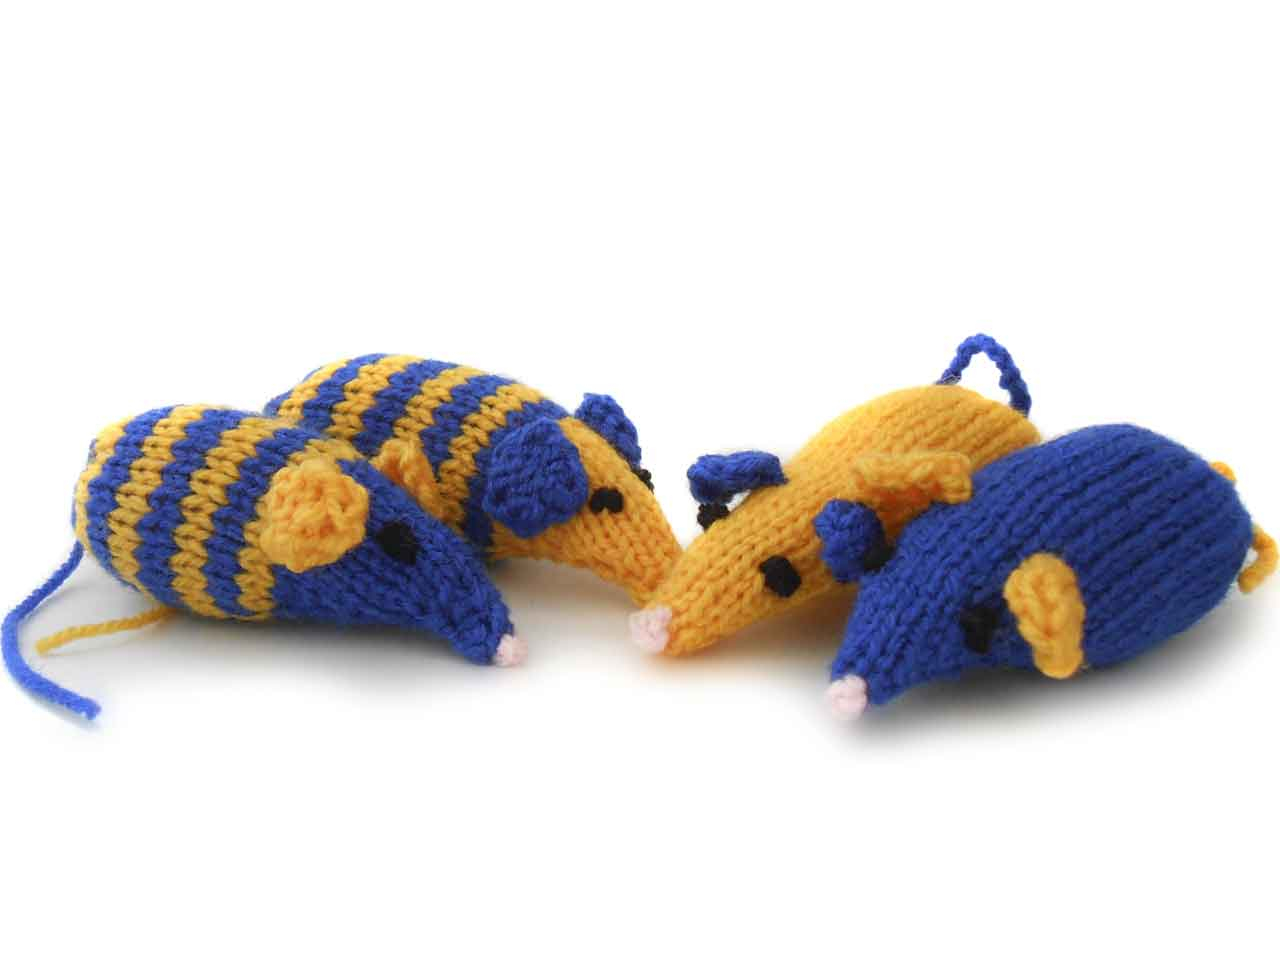 Fish Knitting Pattern Free Knitted Catnip Mice Saga